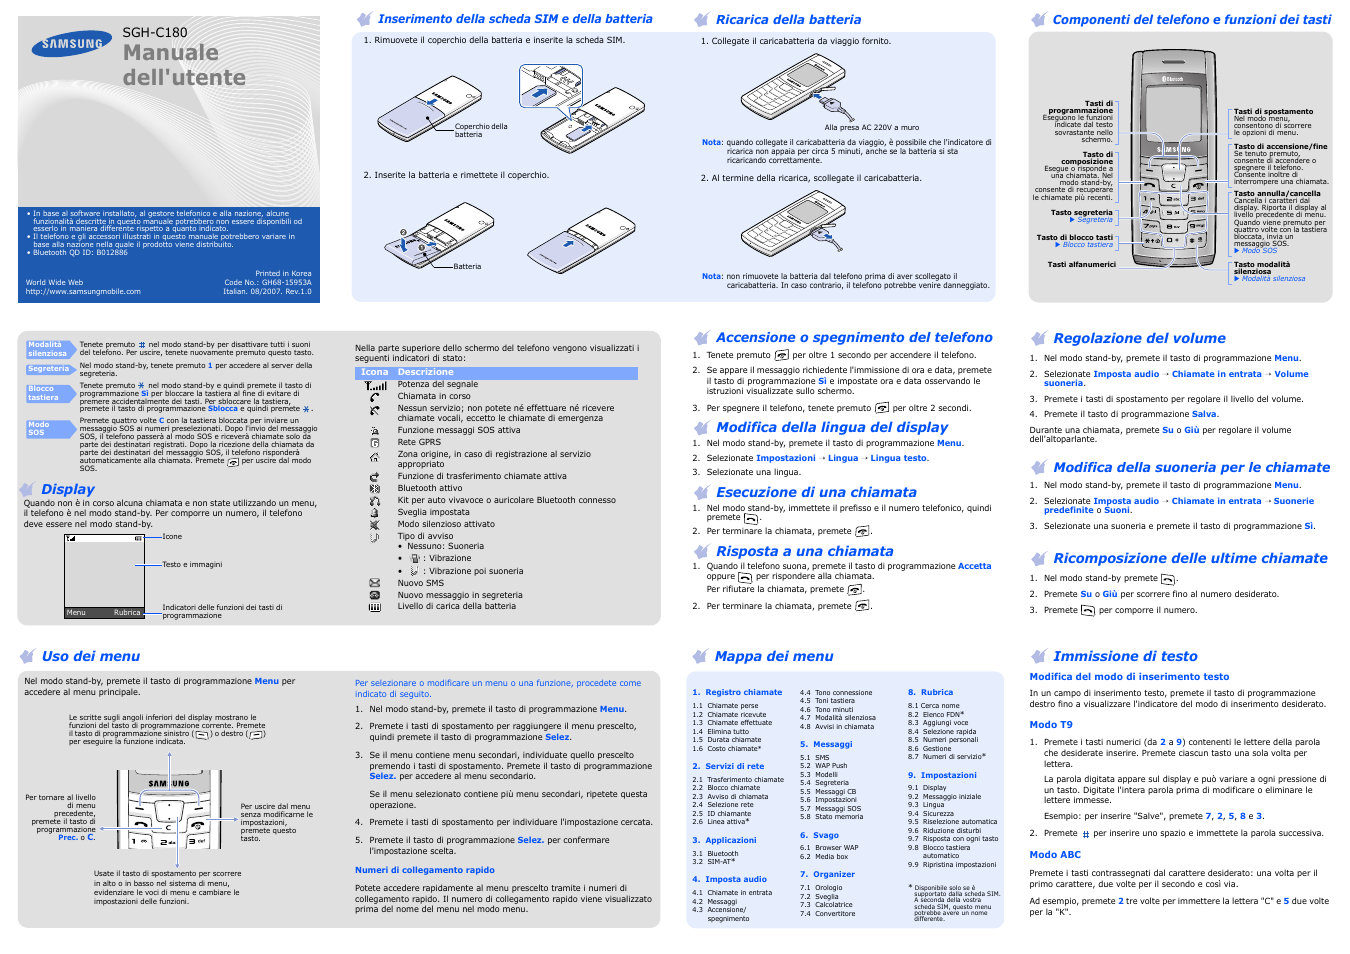 Samsung SGH-C180 Manuale d'uso | Pagine: 2